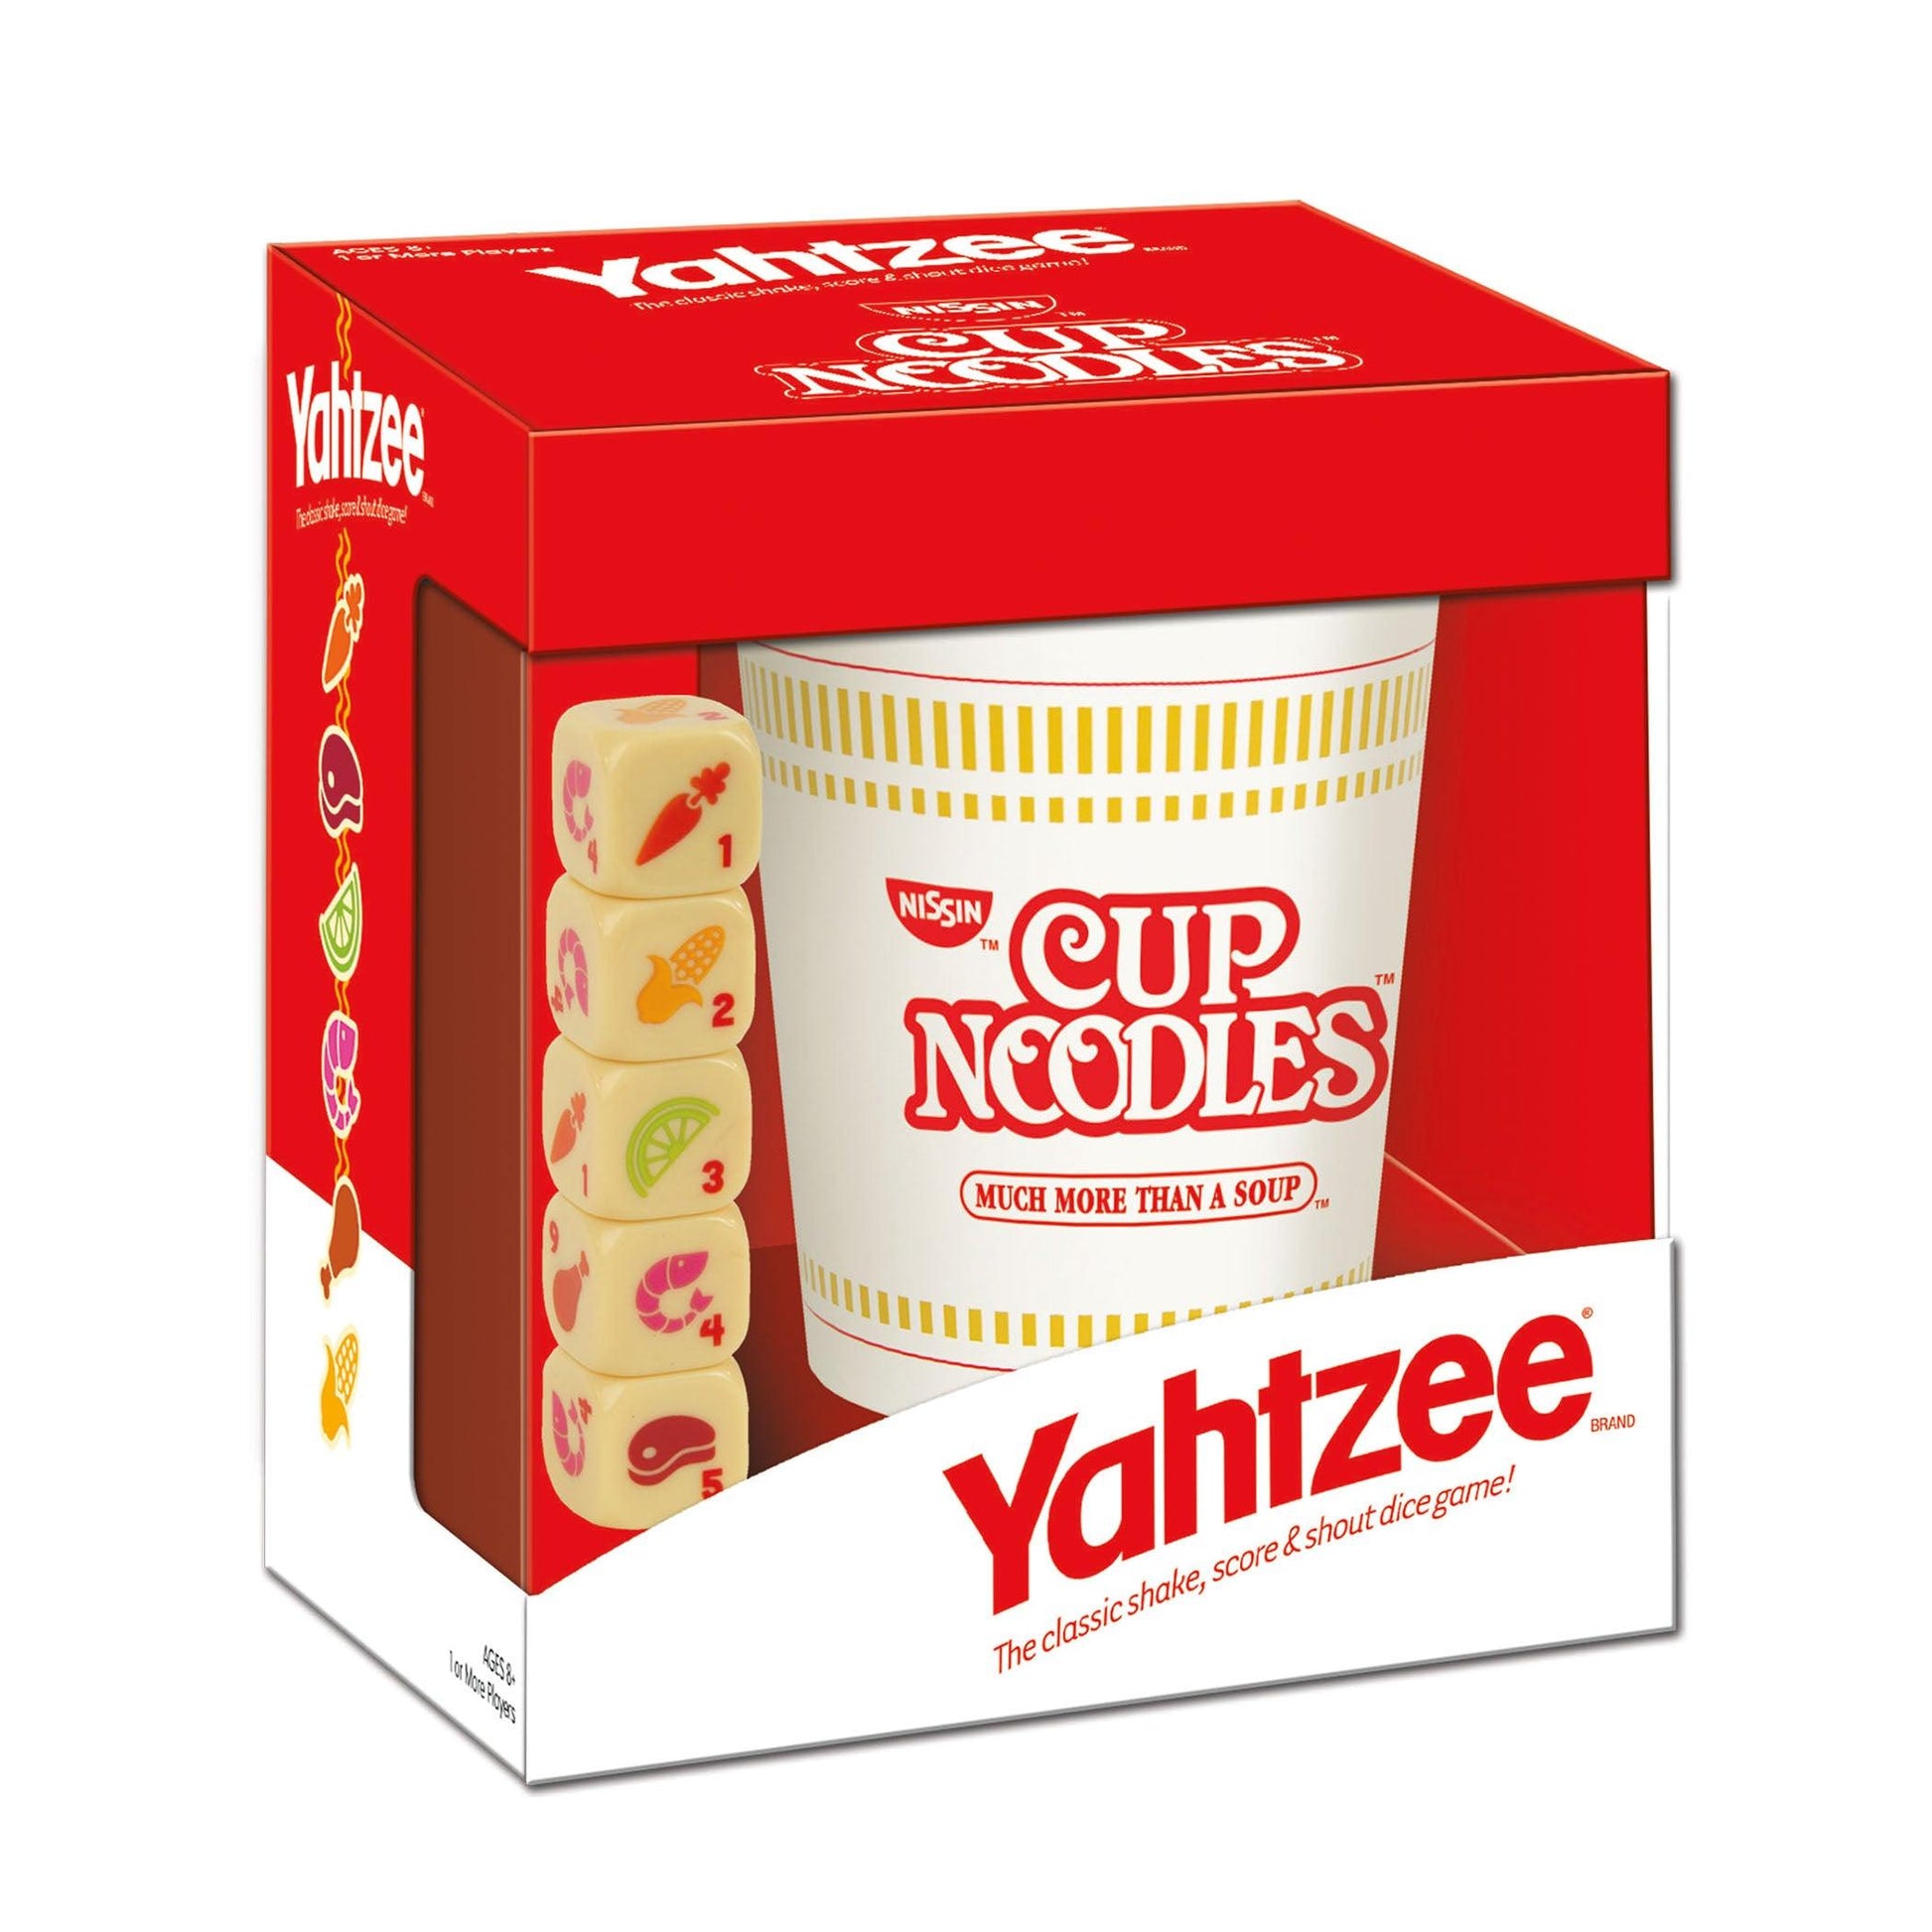 YAHTZEE®: Cup Noodles - Loomini